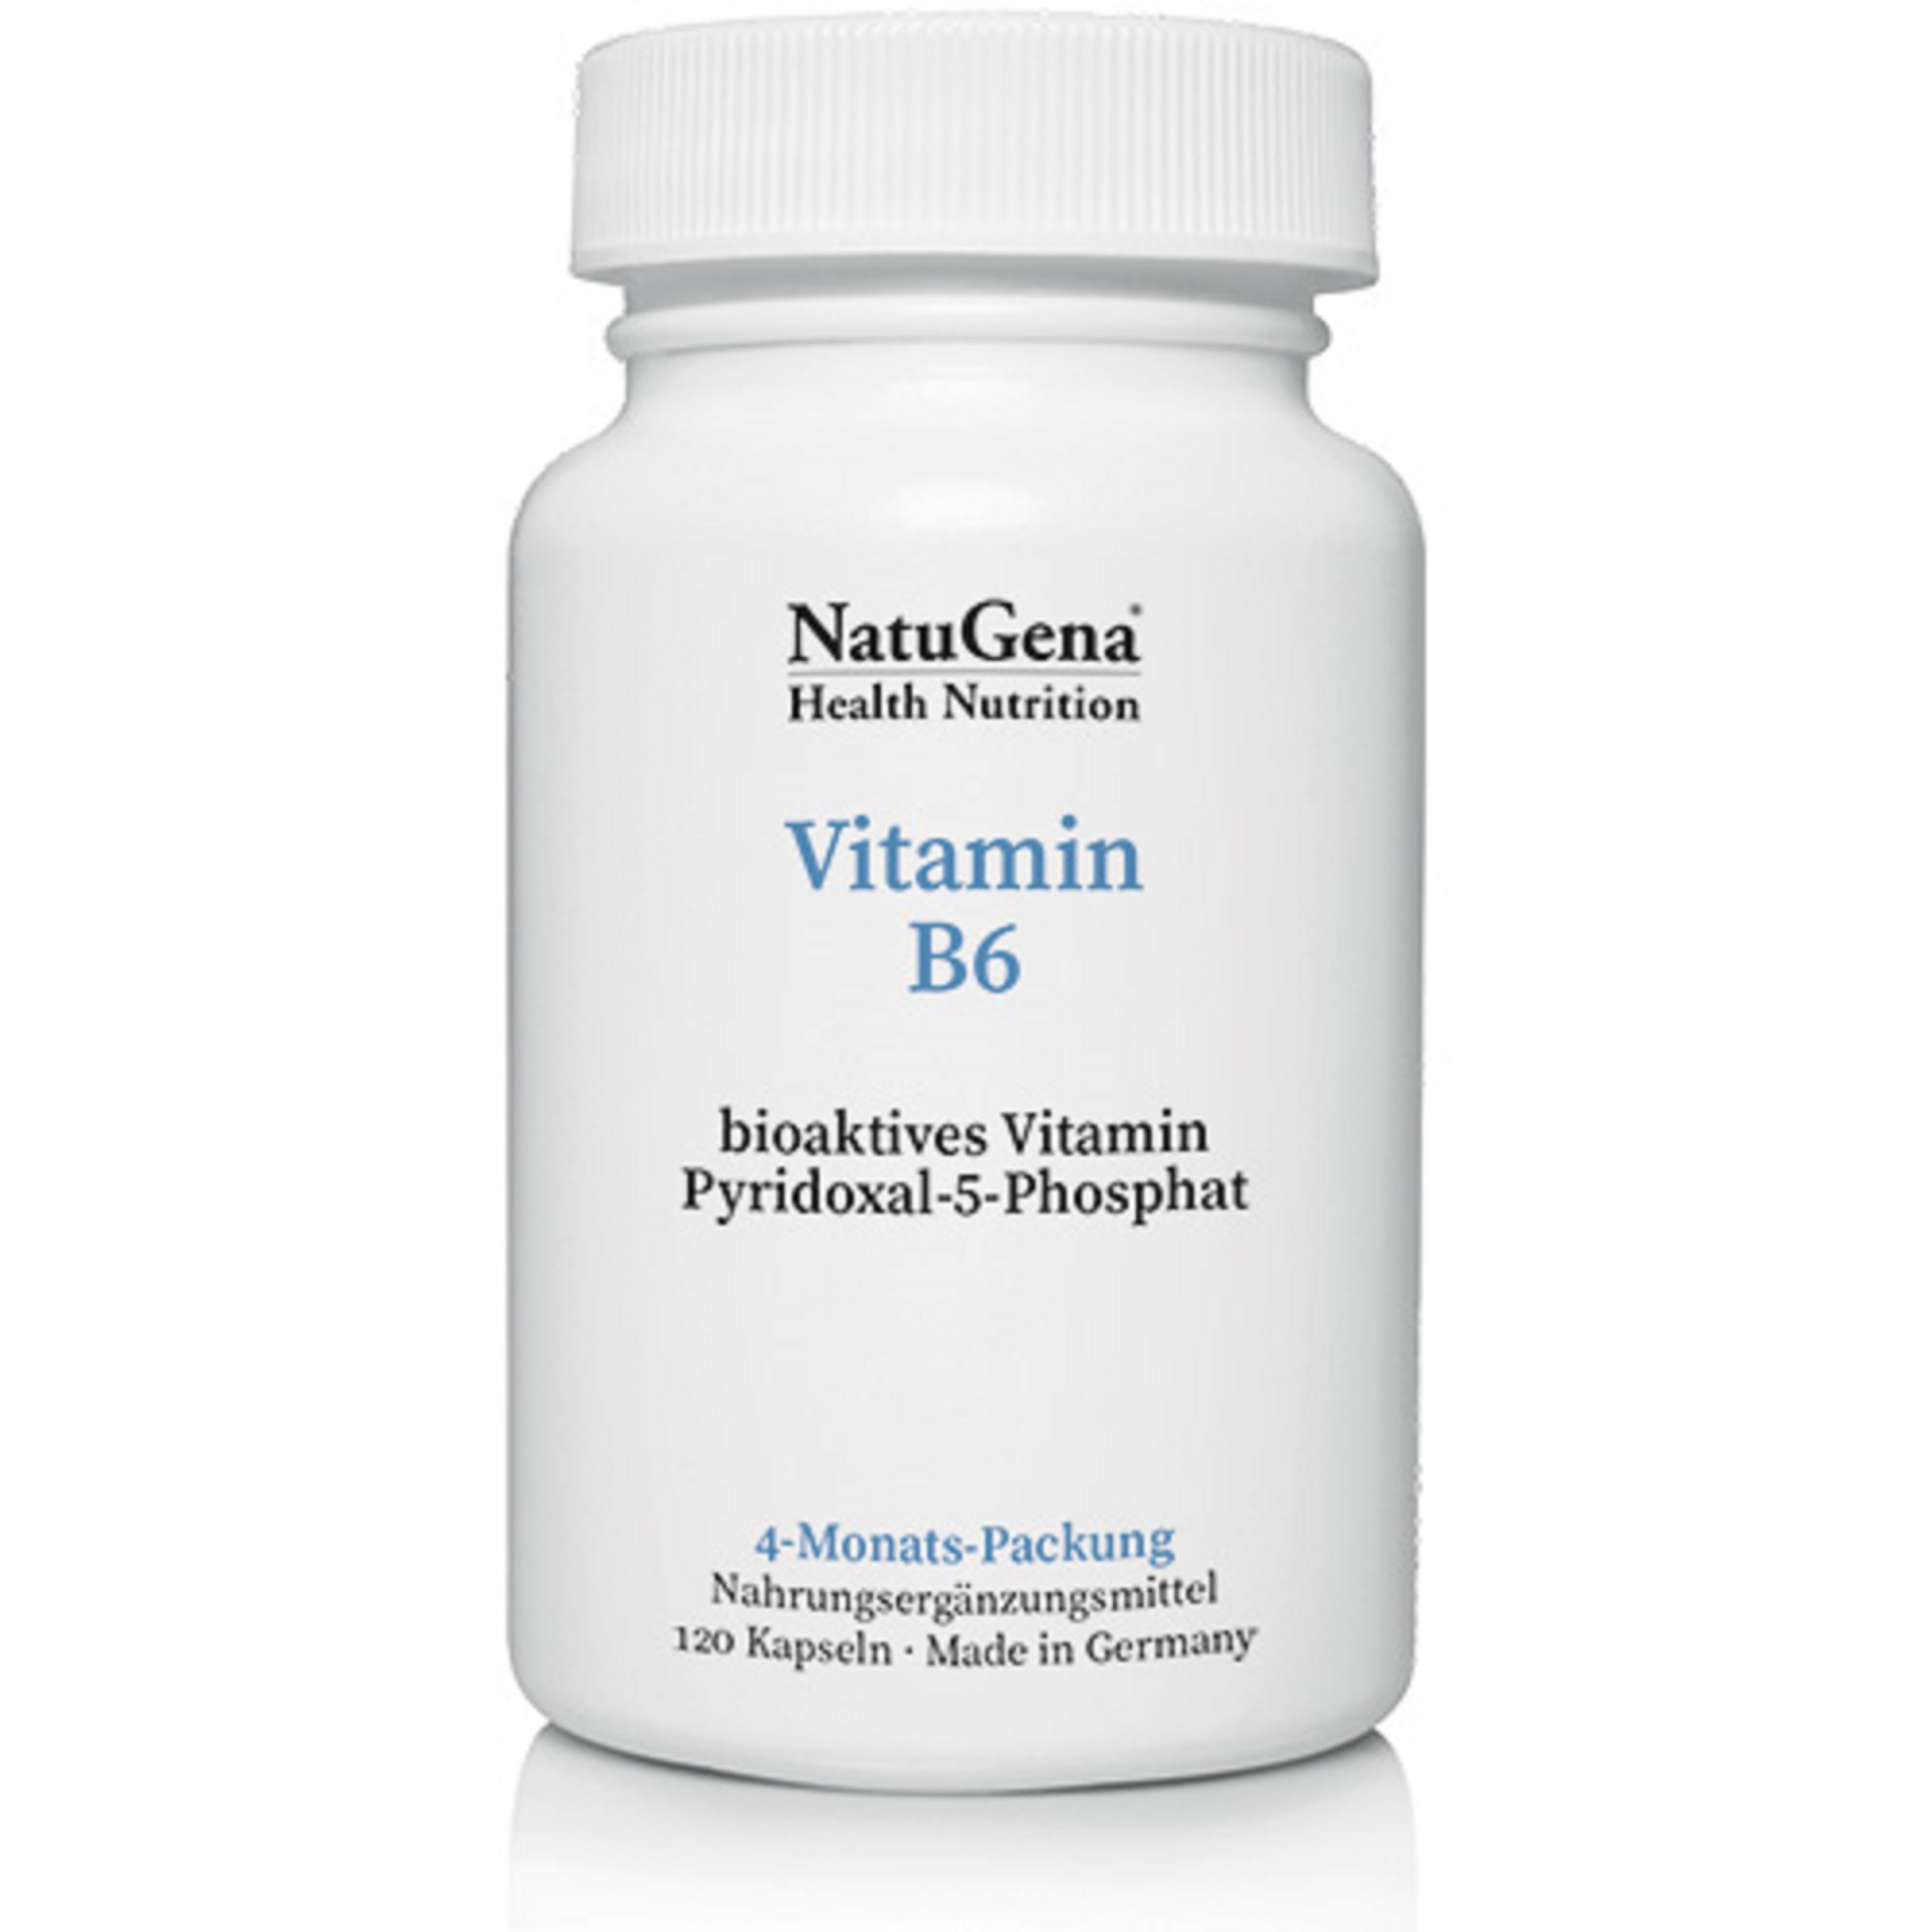 NatuGena Vitamin B6 Kapseln